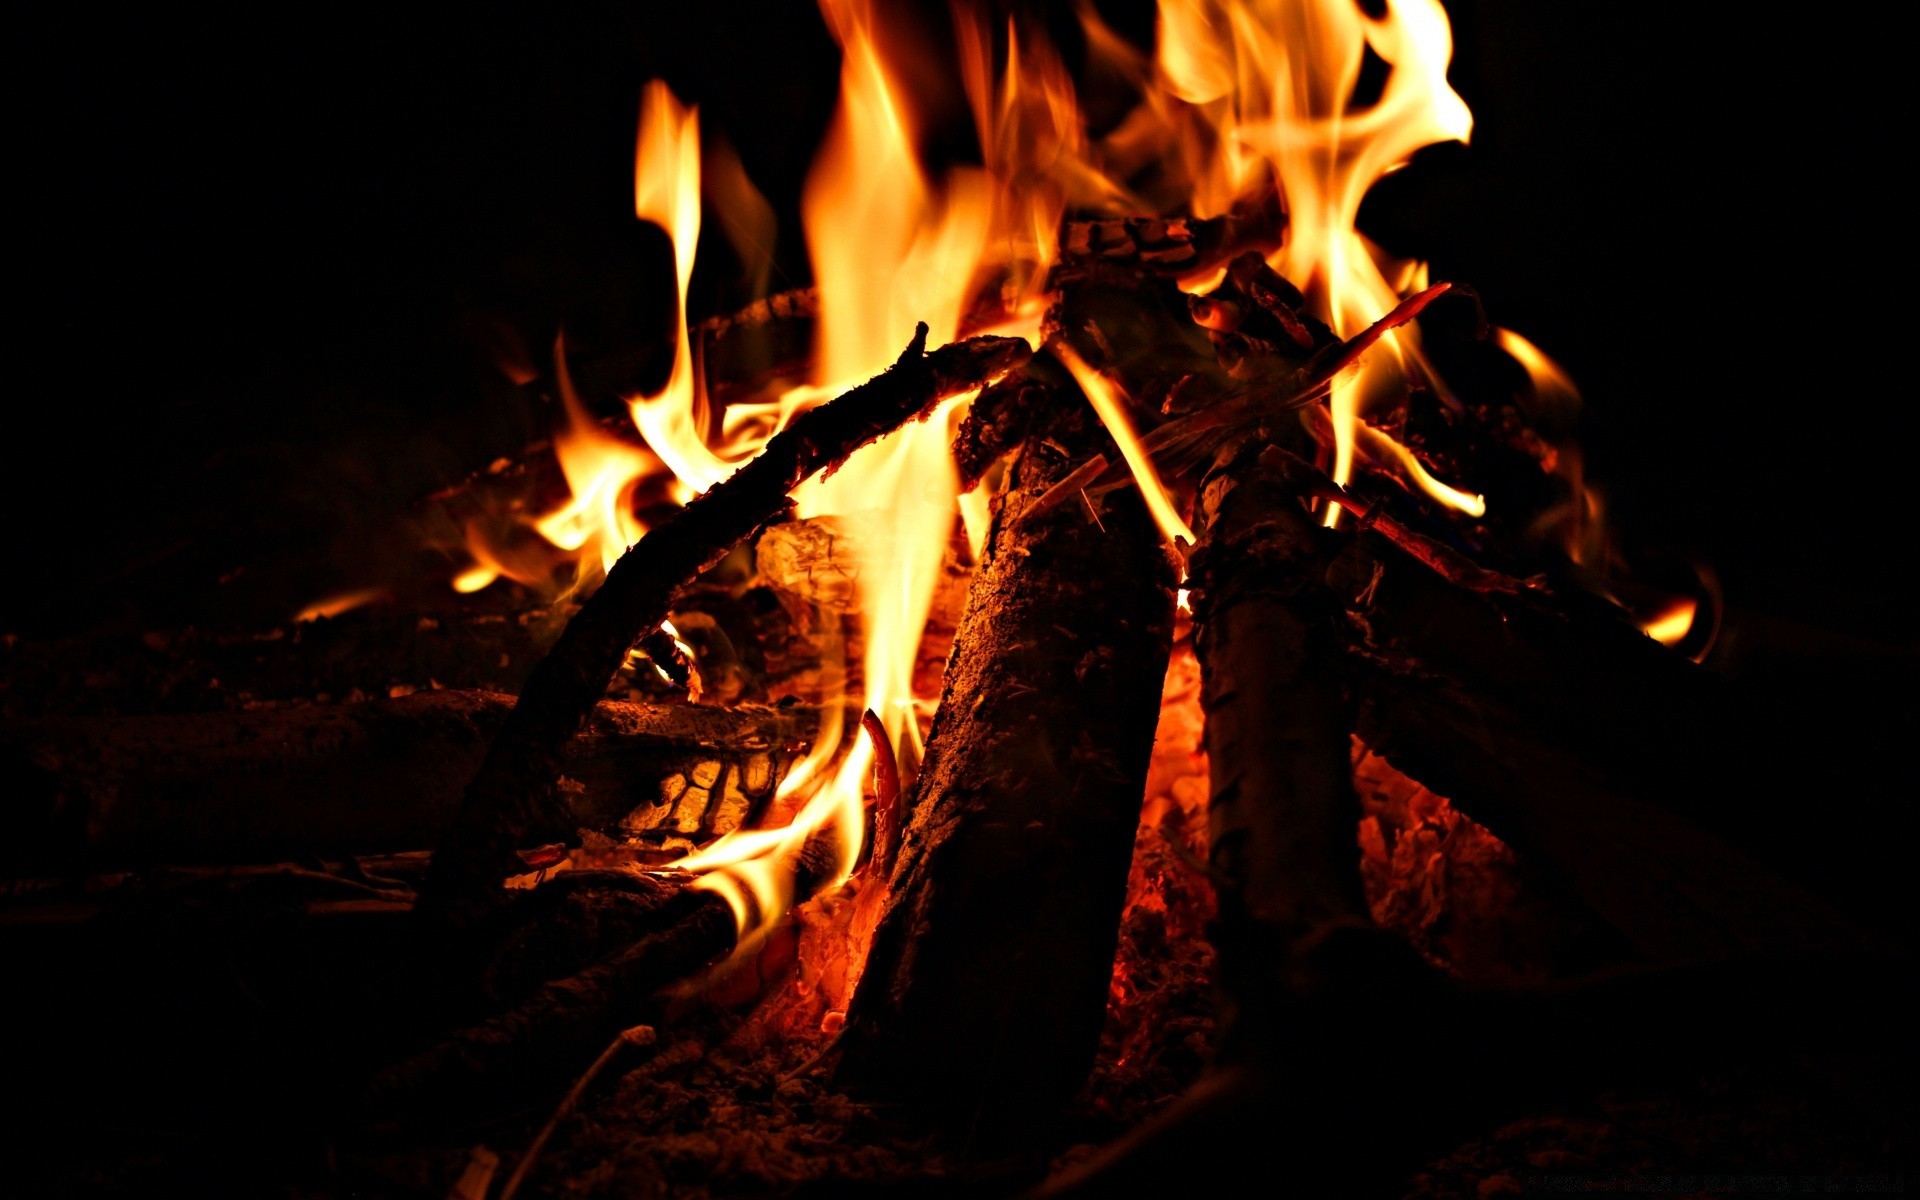 fire flame bonfire hot campfire fireplace heat firewood burn coal warmly ignite inferno burnt blaze ash flammable smoke danger wildfire charcoal